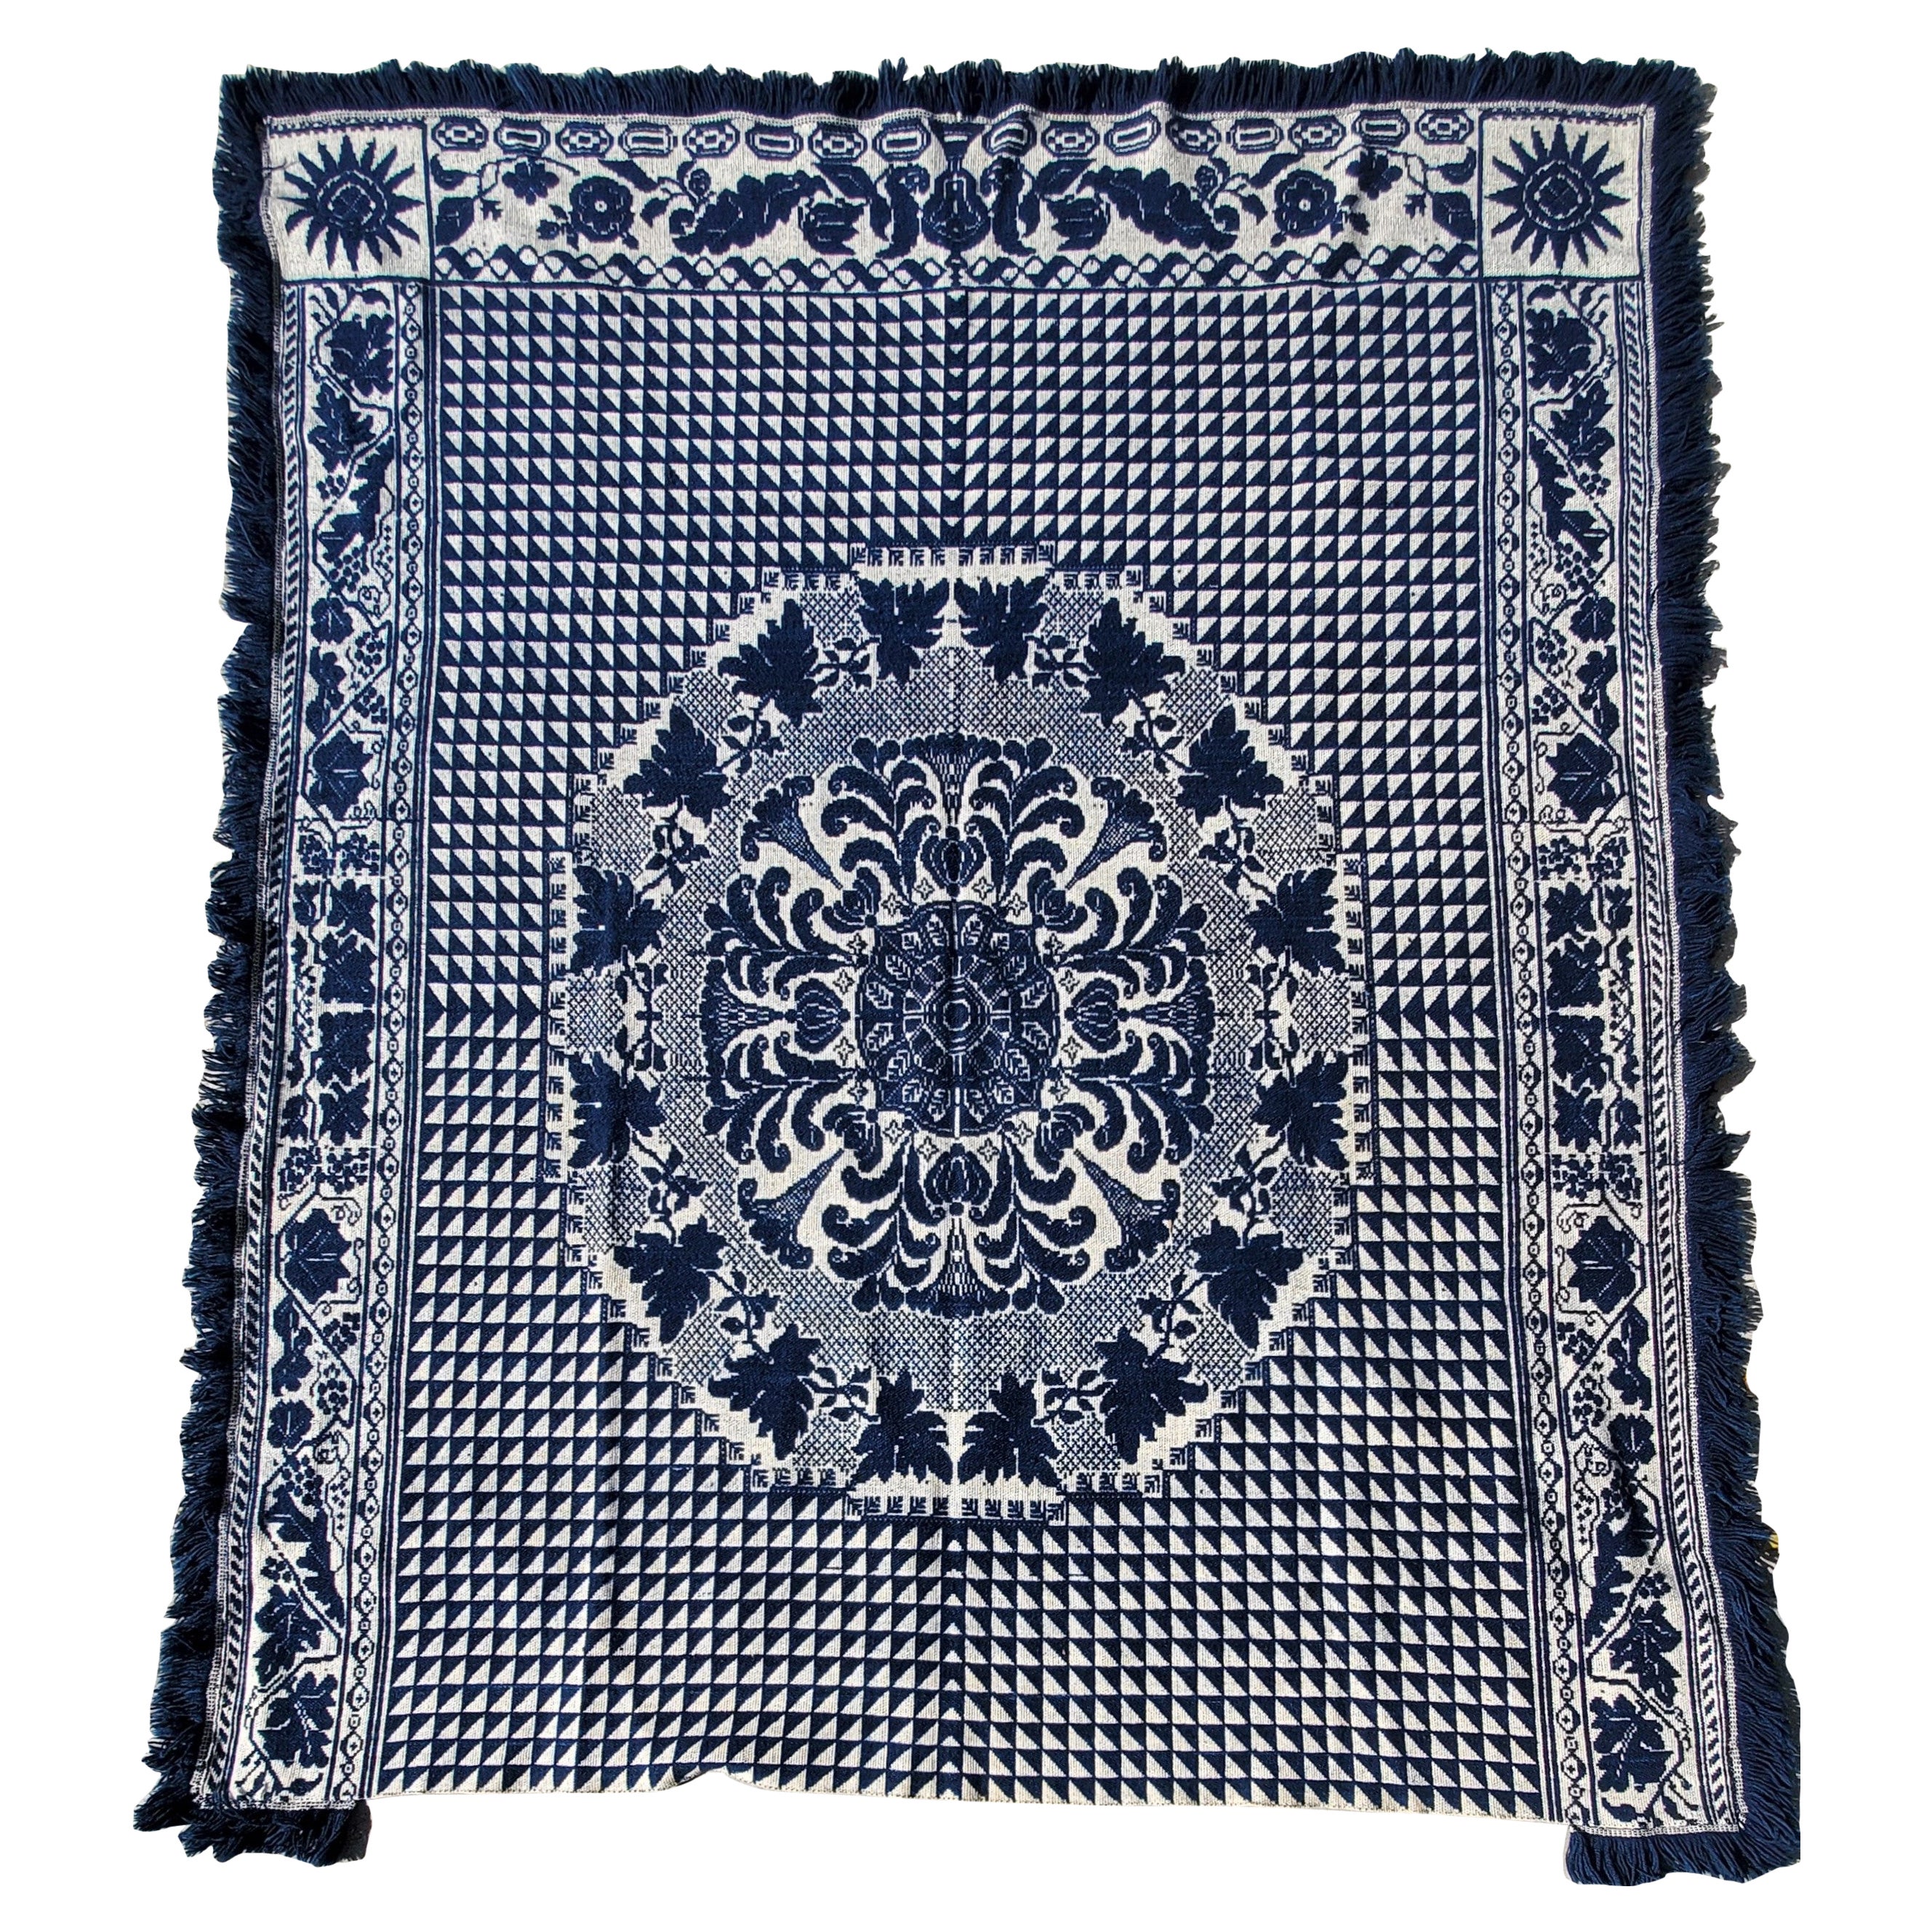 Blau-weißes gewebtes Jacquard-Deckel aus Pennsylvania aus dem 19. Jahrhundert